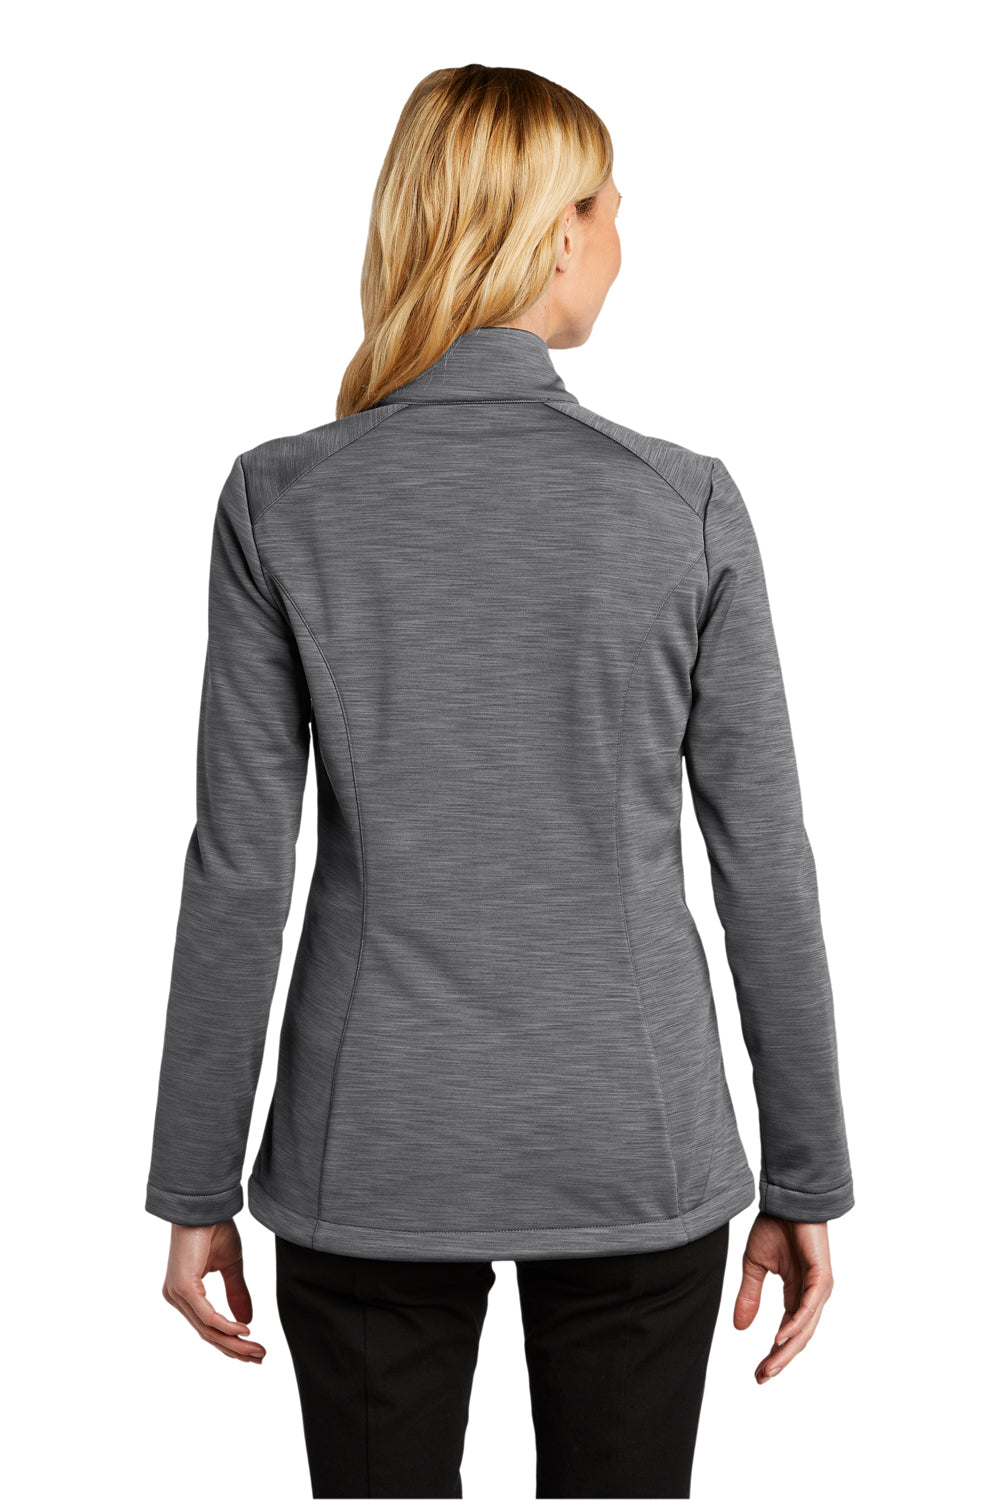 Port Authority Womens Stream Full Zip Jacket Heather Graphite Grey Side